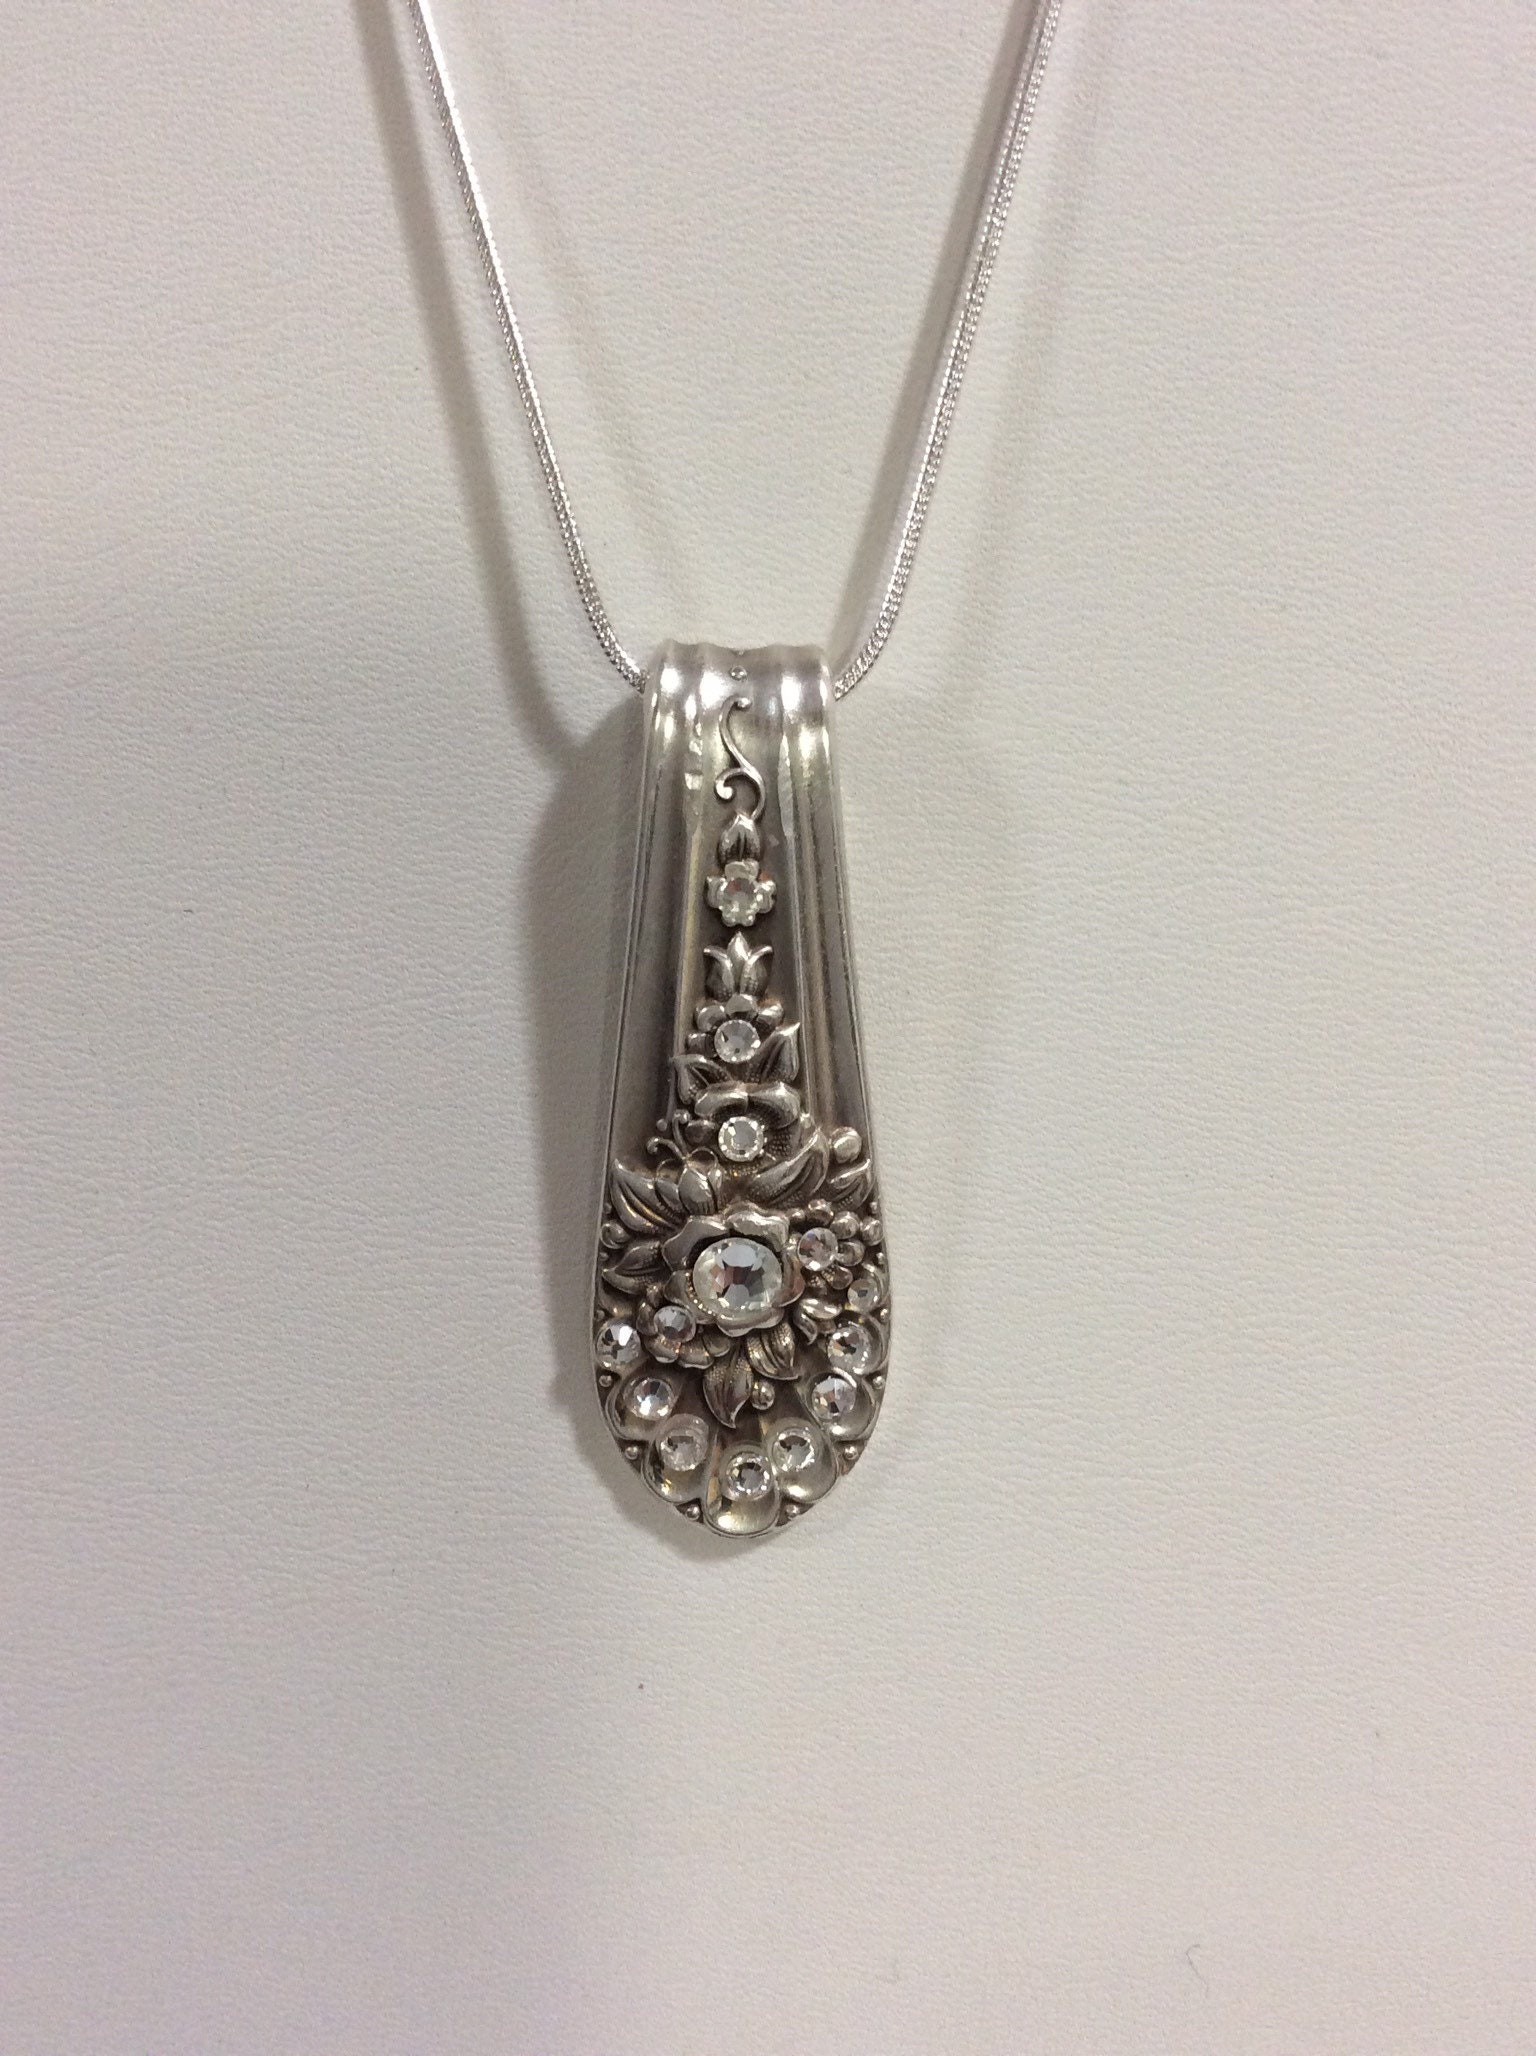 Handmade Jubilee spoon handle pendant